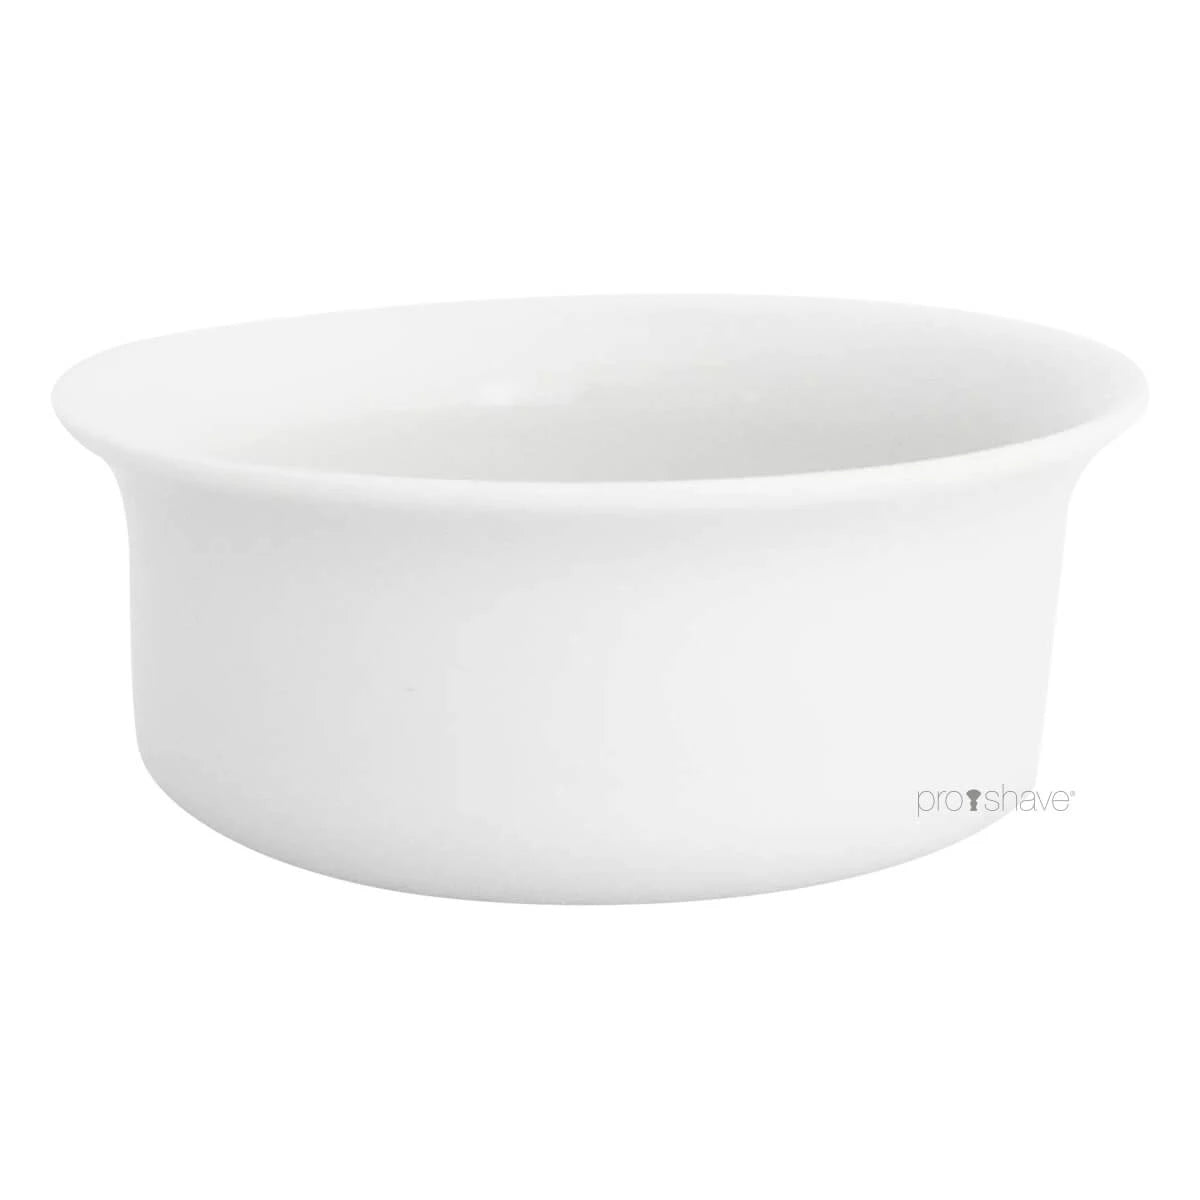 Plisson, Limoges Porcelain Shaving Bowl and Shaving Soap